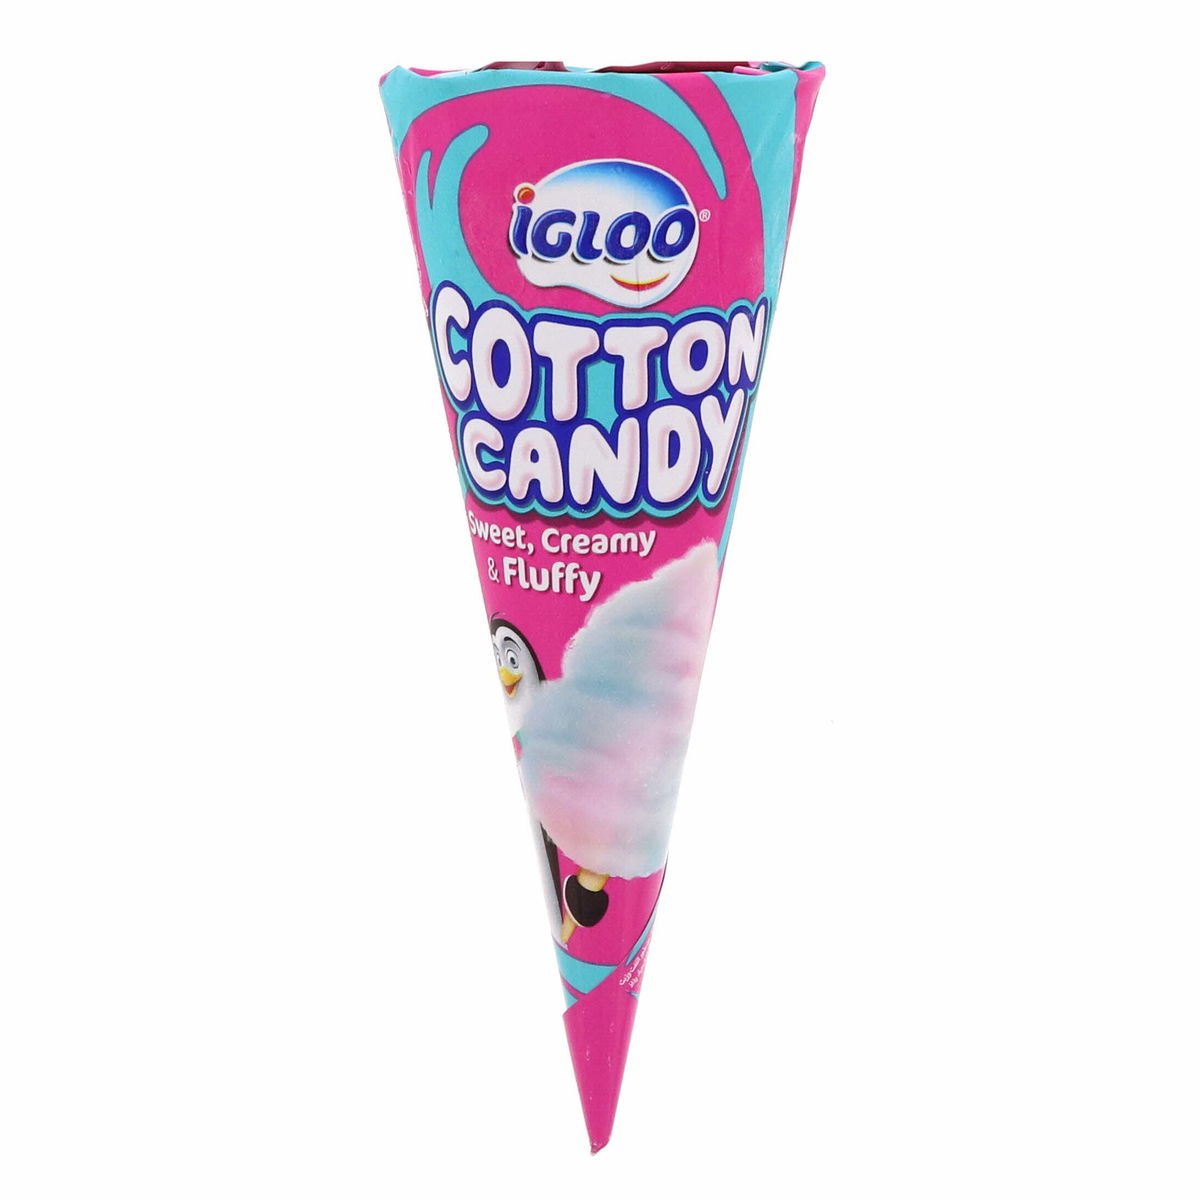 Igloo Cotton Candy Ice Cream Cone 120ml